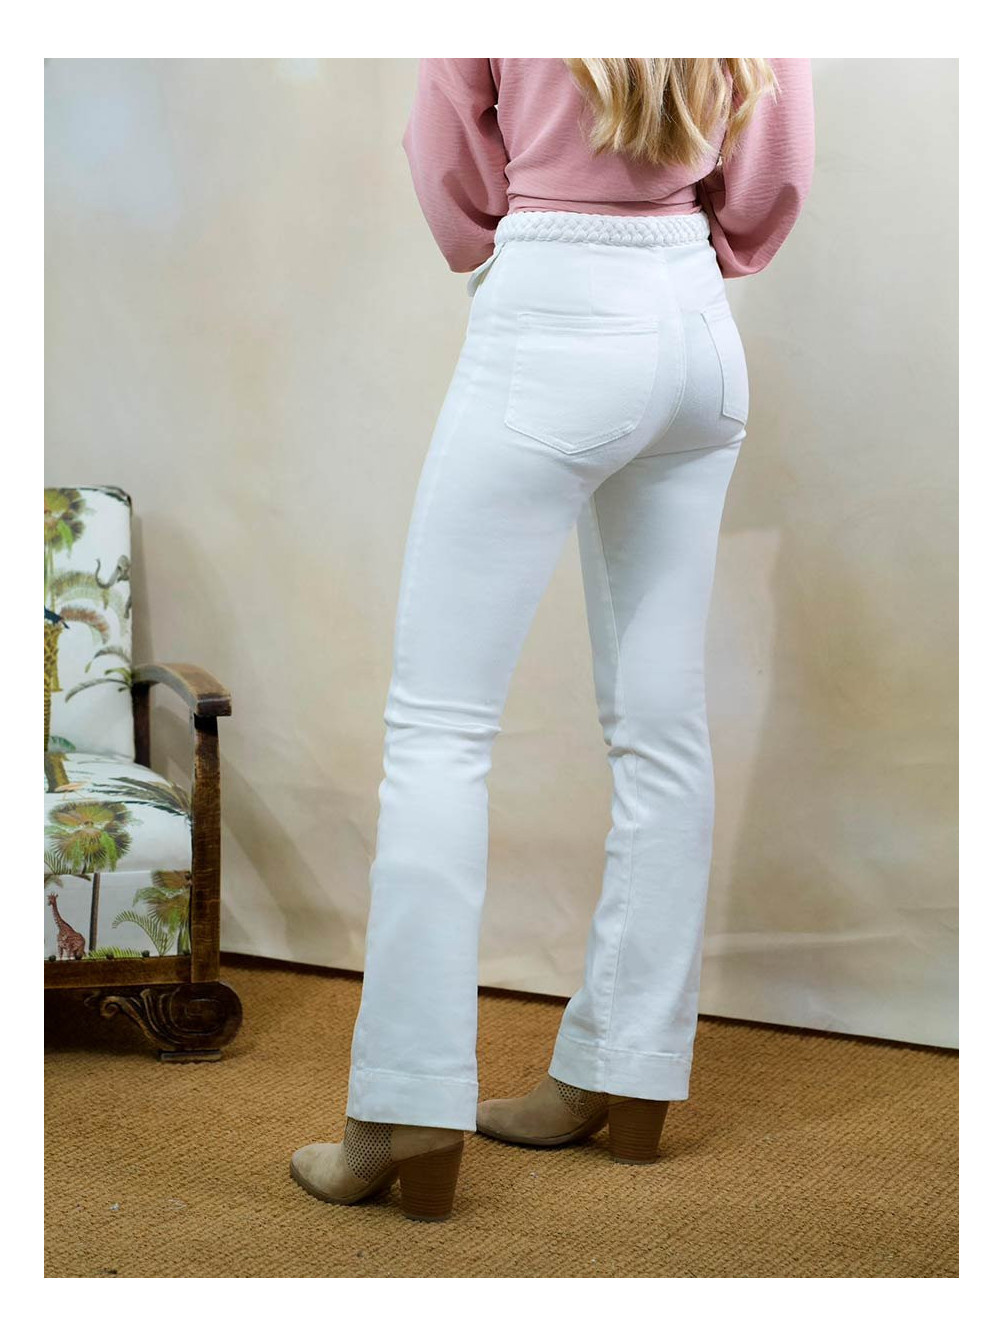 Jeans Cinturilla | Jeans Blanco Mujer | Mariquita Trasquilá